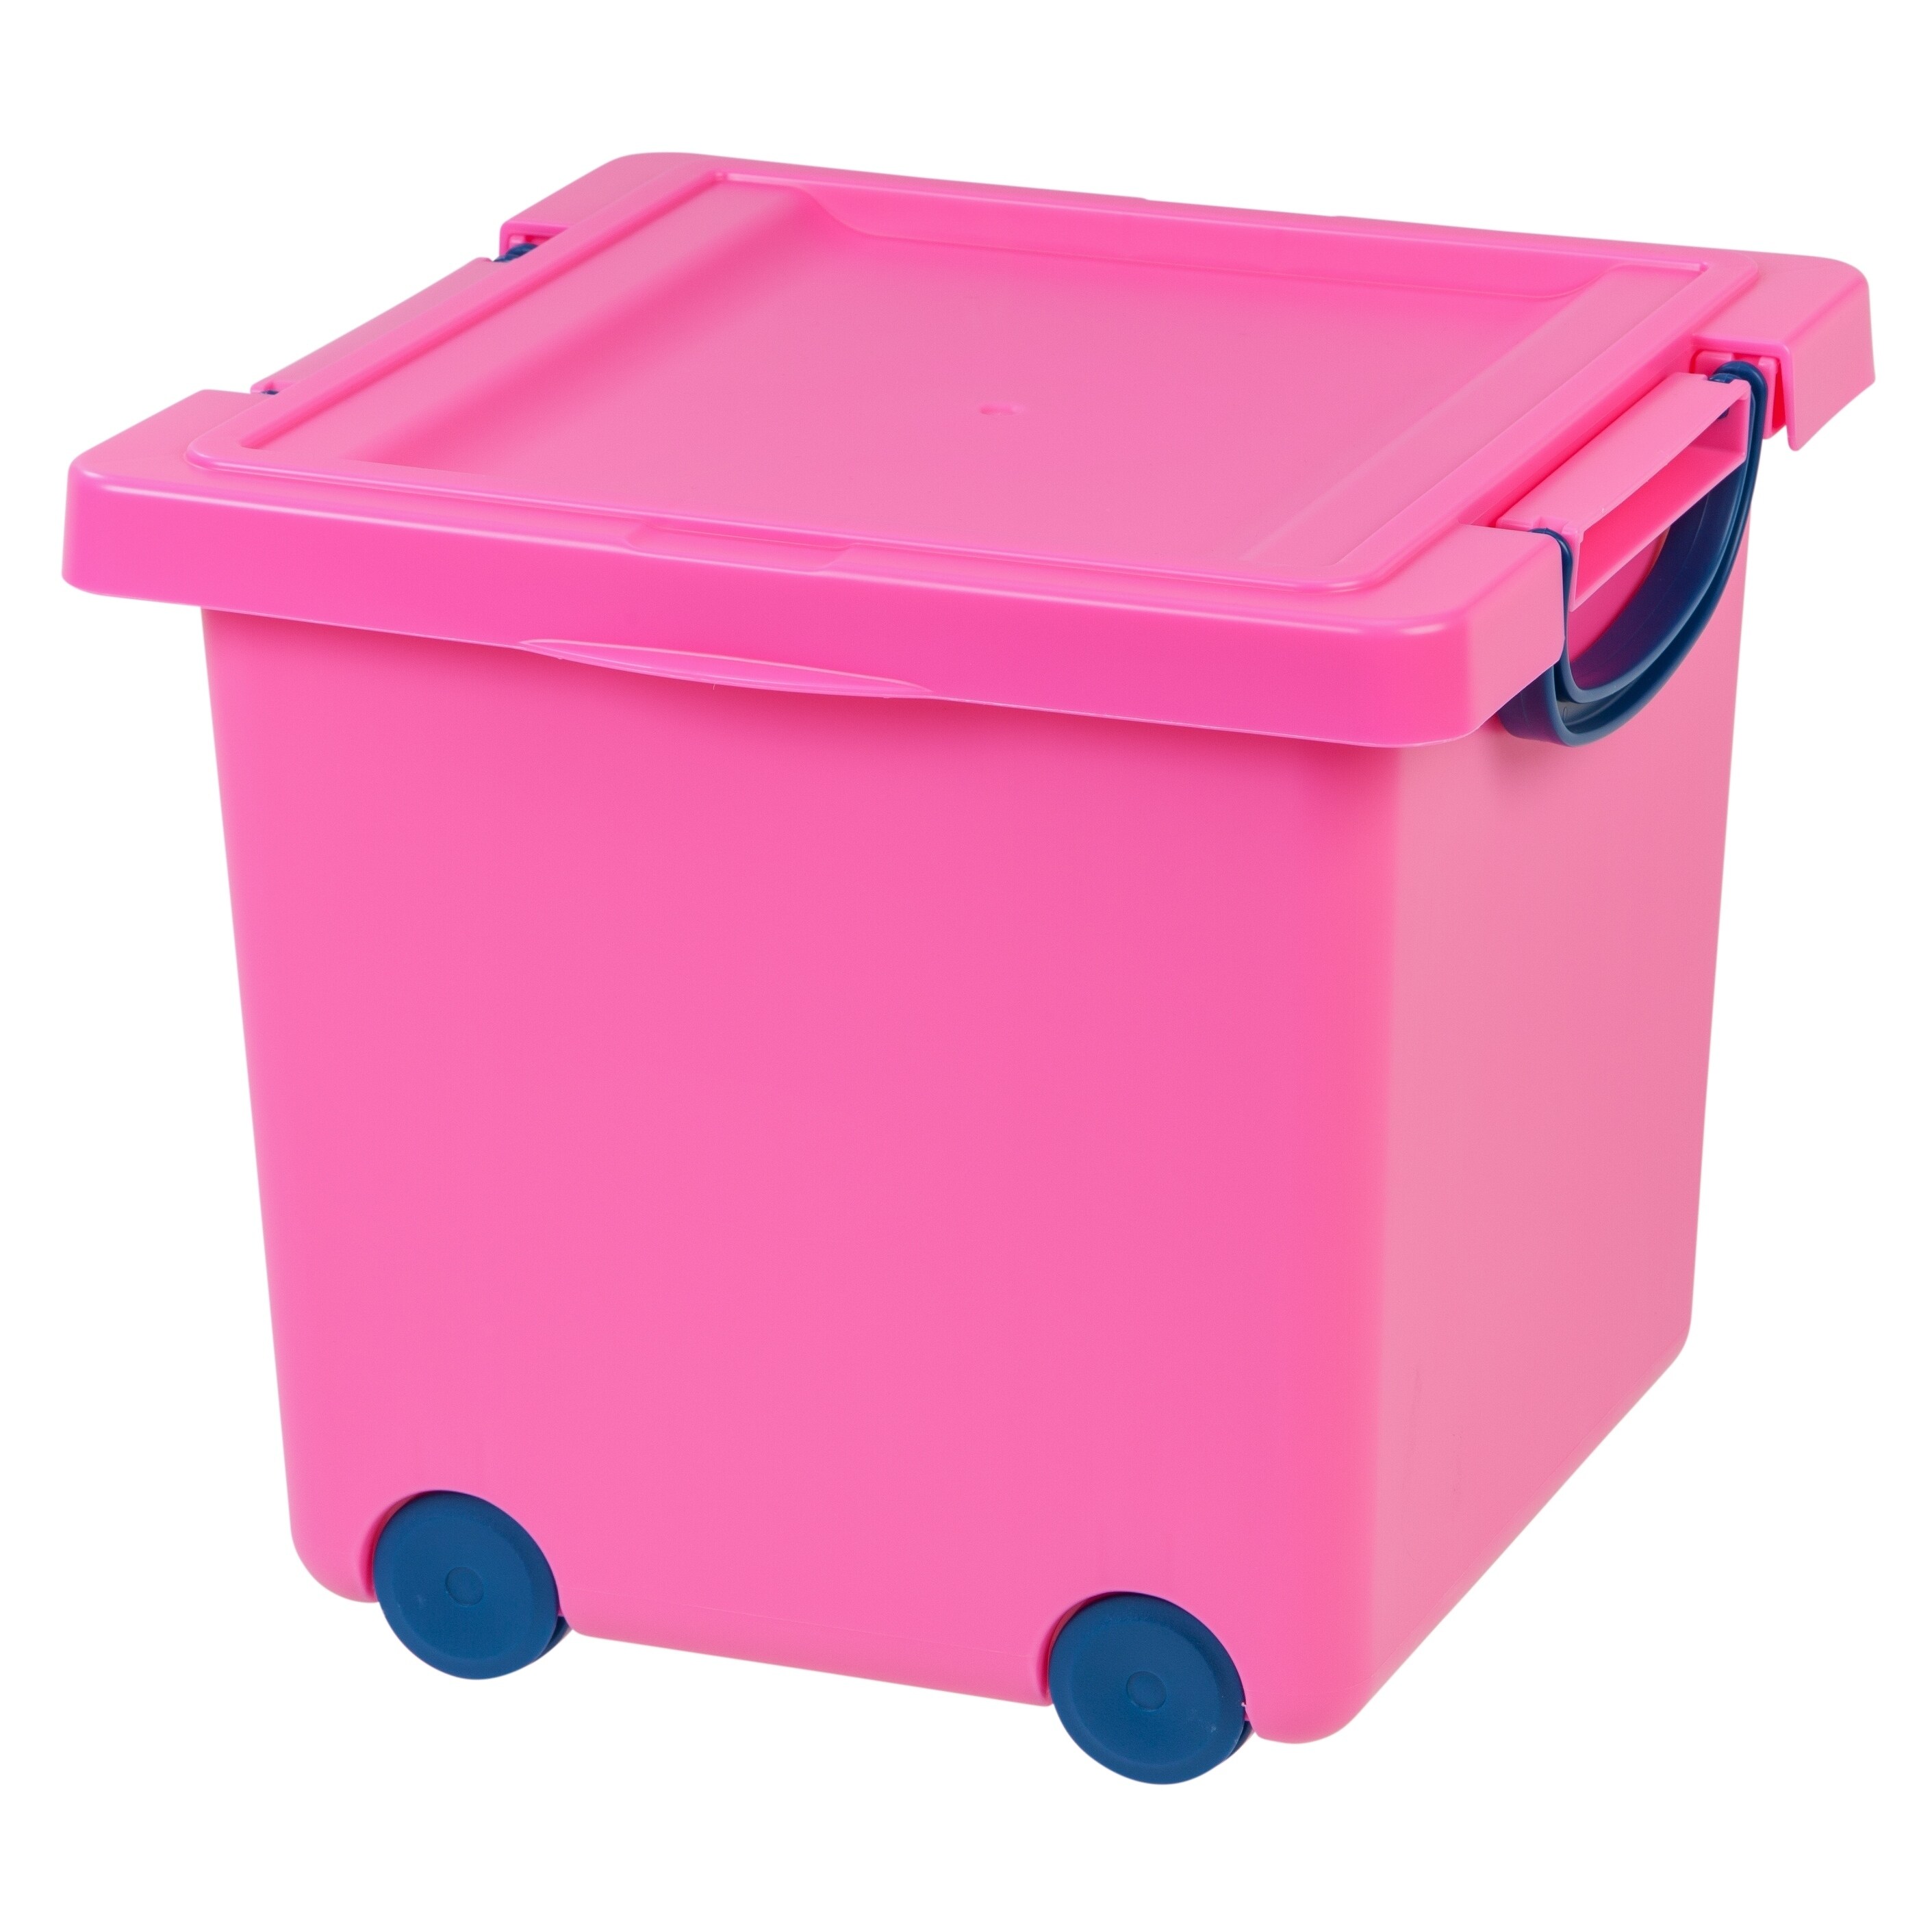 pink toy boxes storage